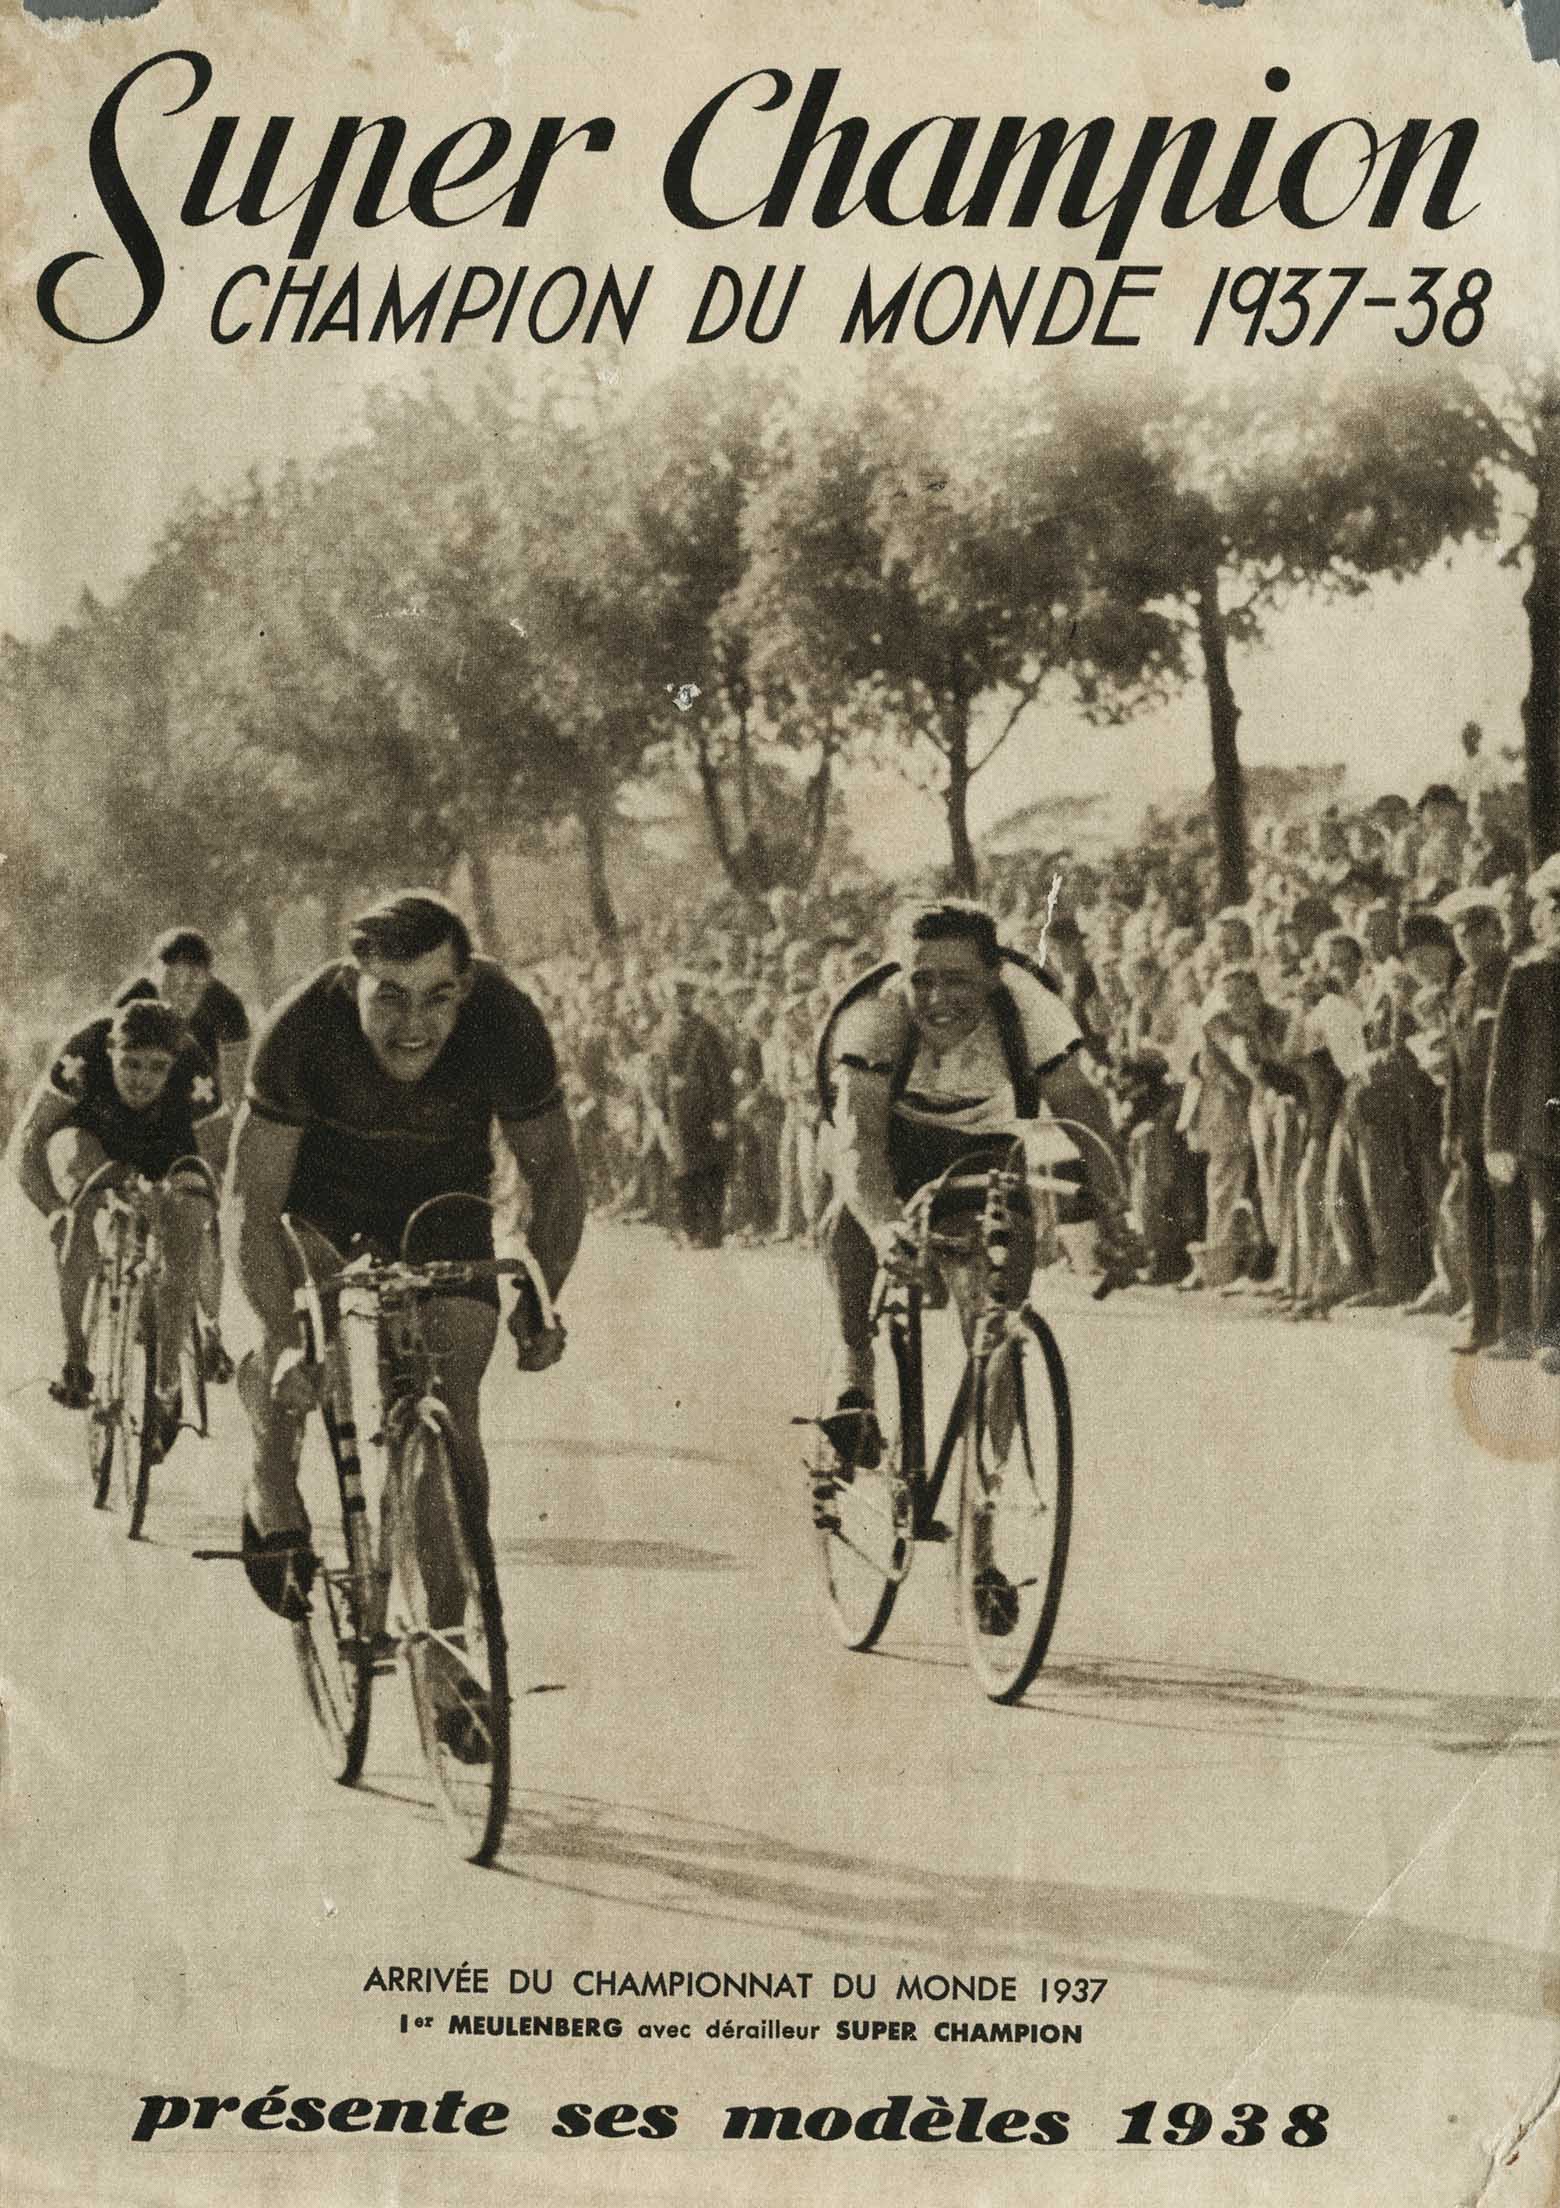 Super Champion presente ses modeles 1938 page 1 main image